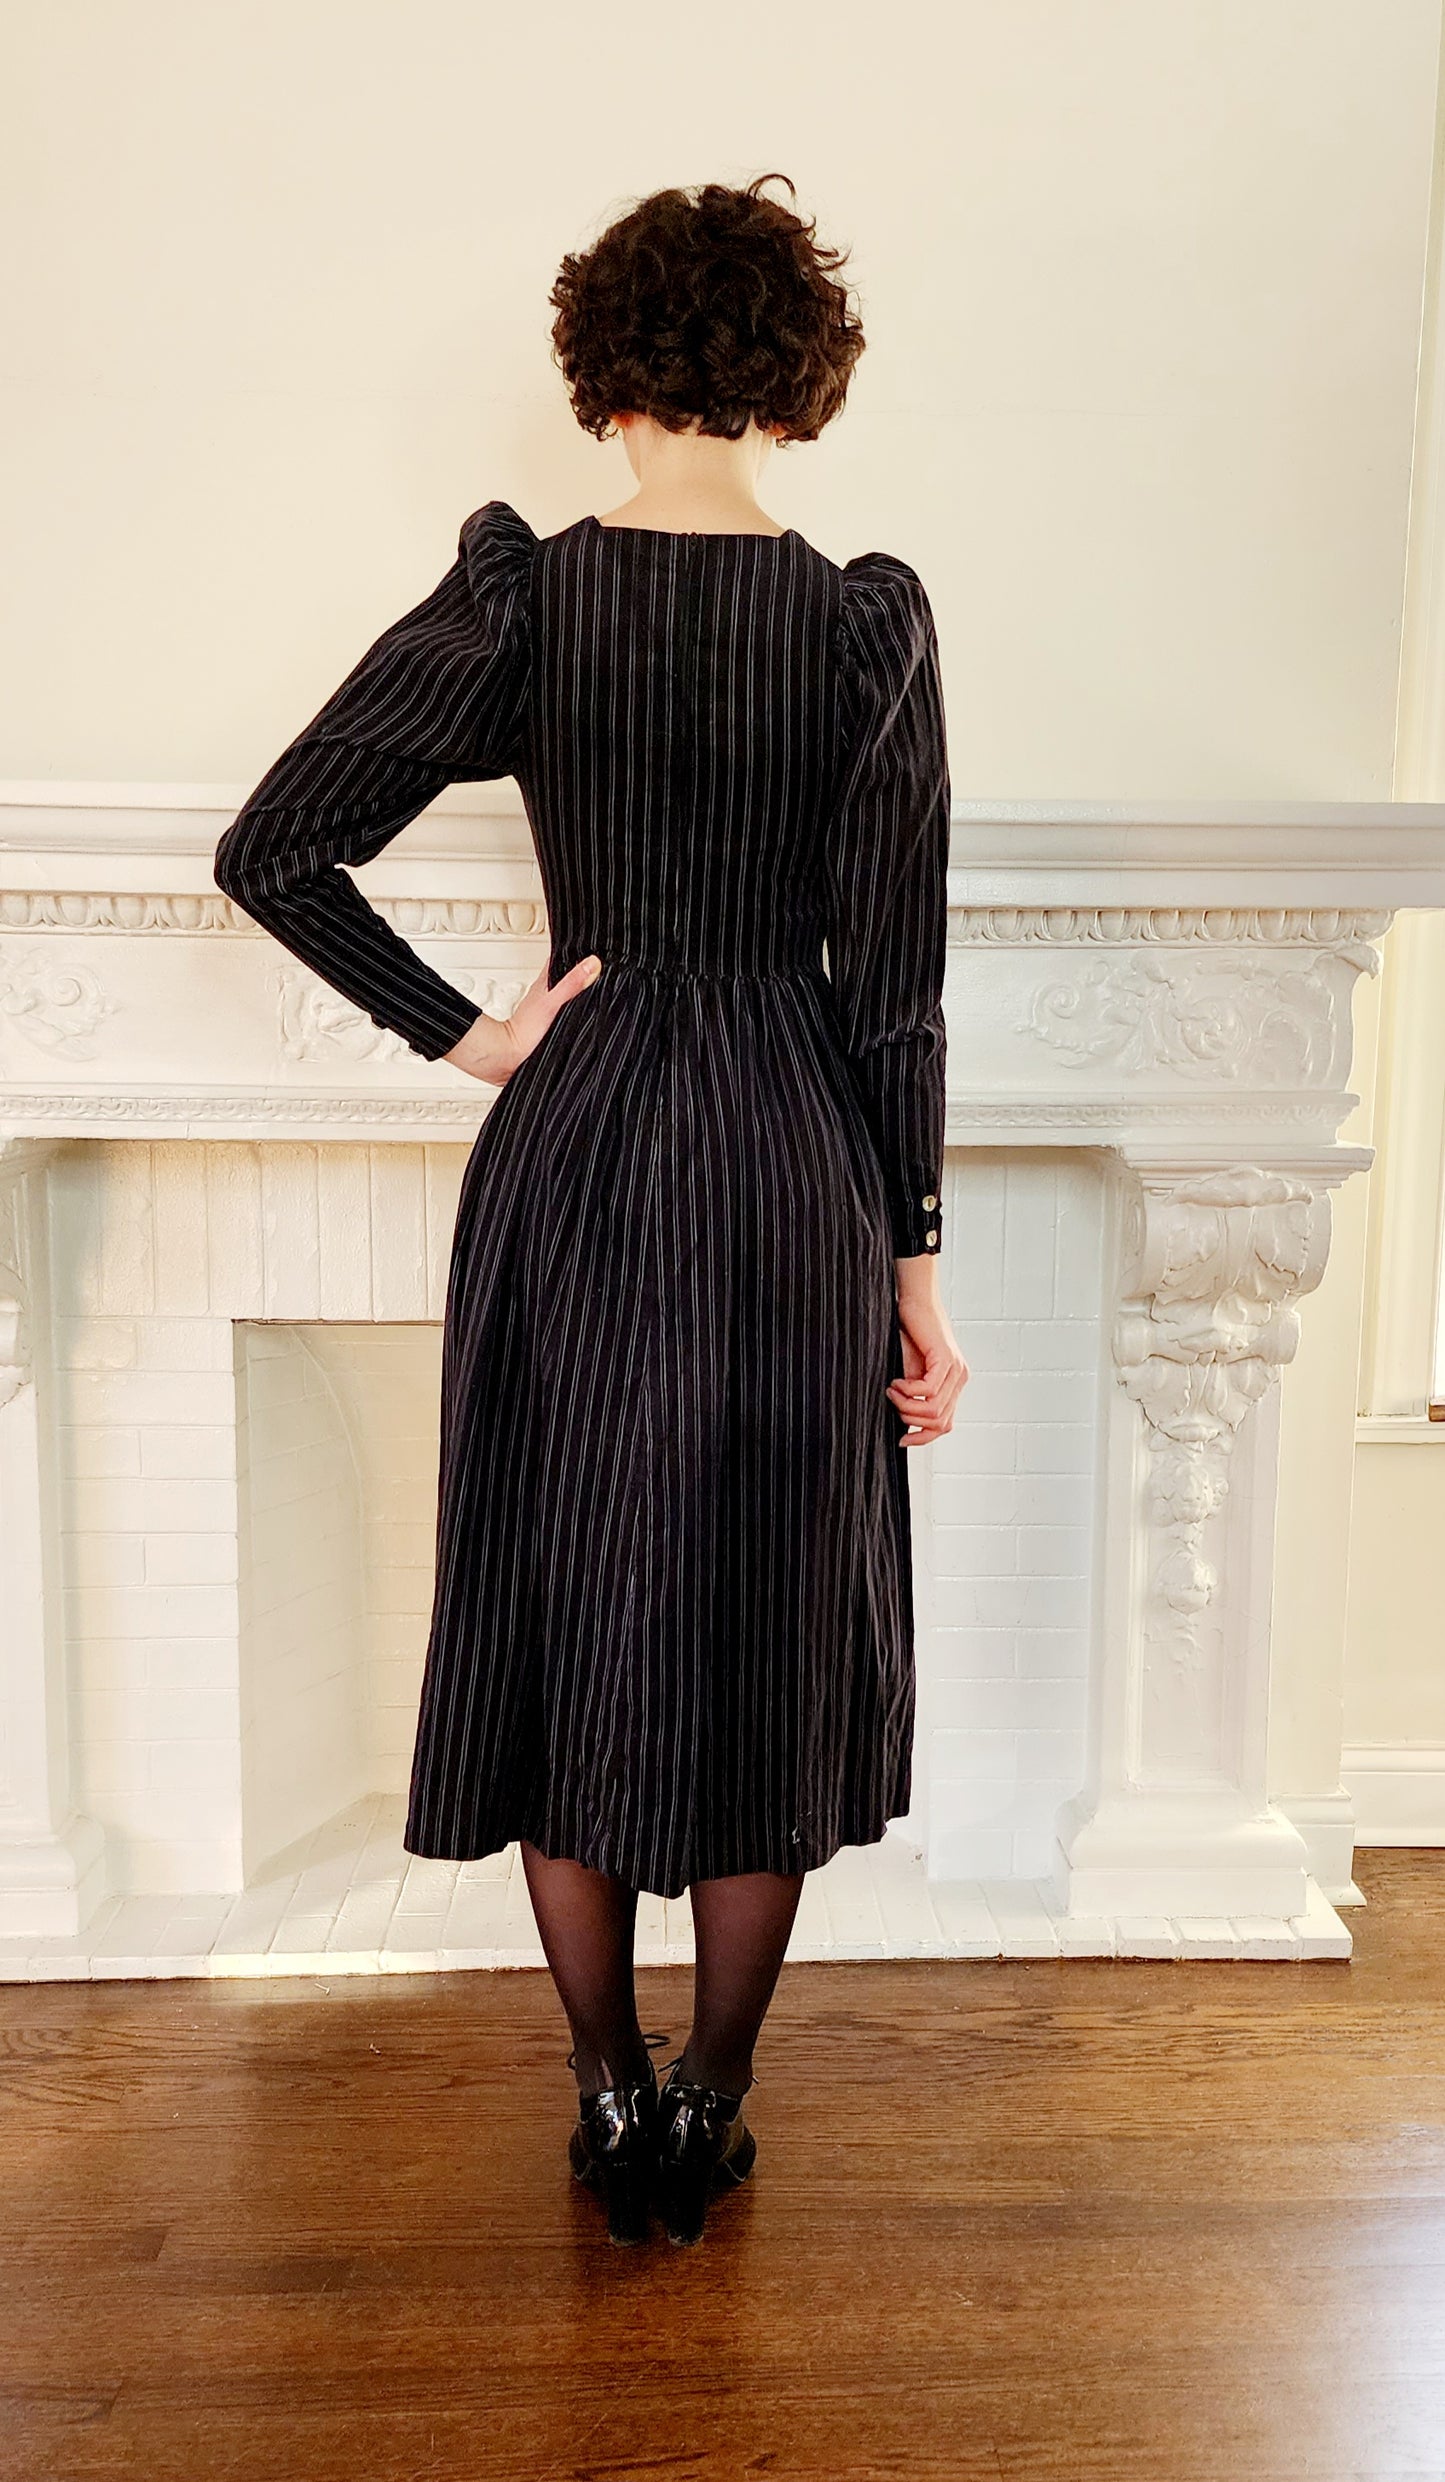 80s Laura Ashley Dress in Charcoal Gray Corduroy w/ Pinstripe Long Sleeves XS